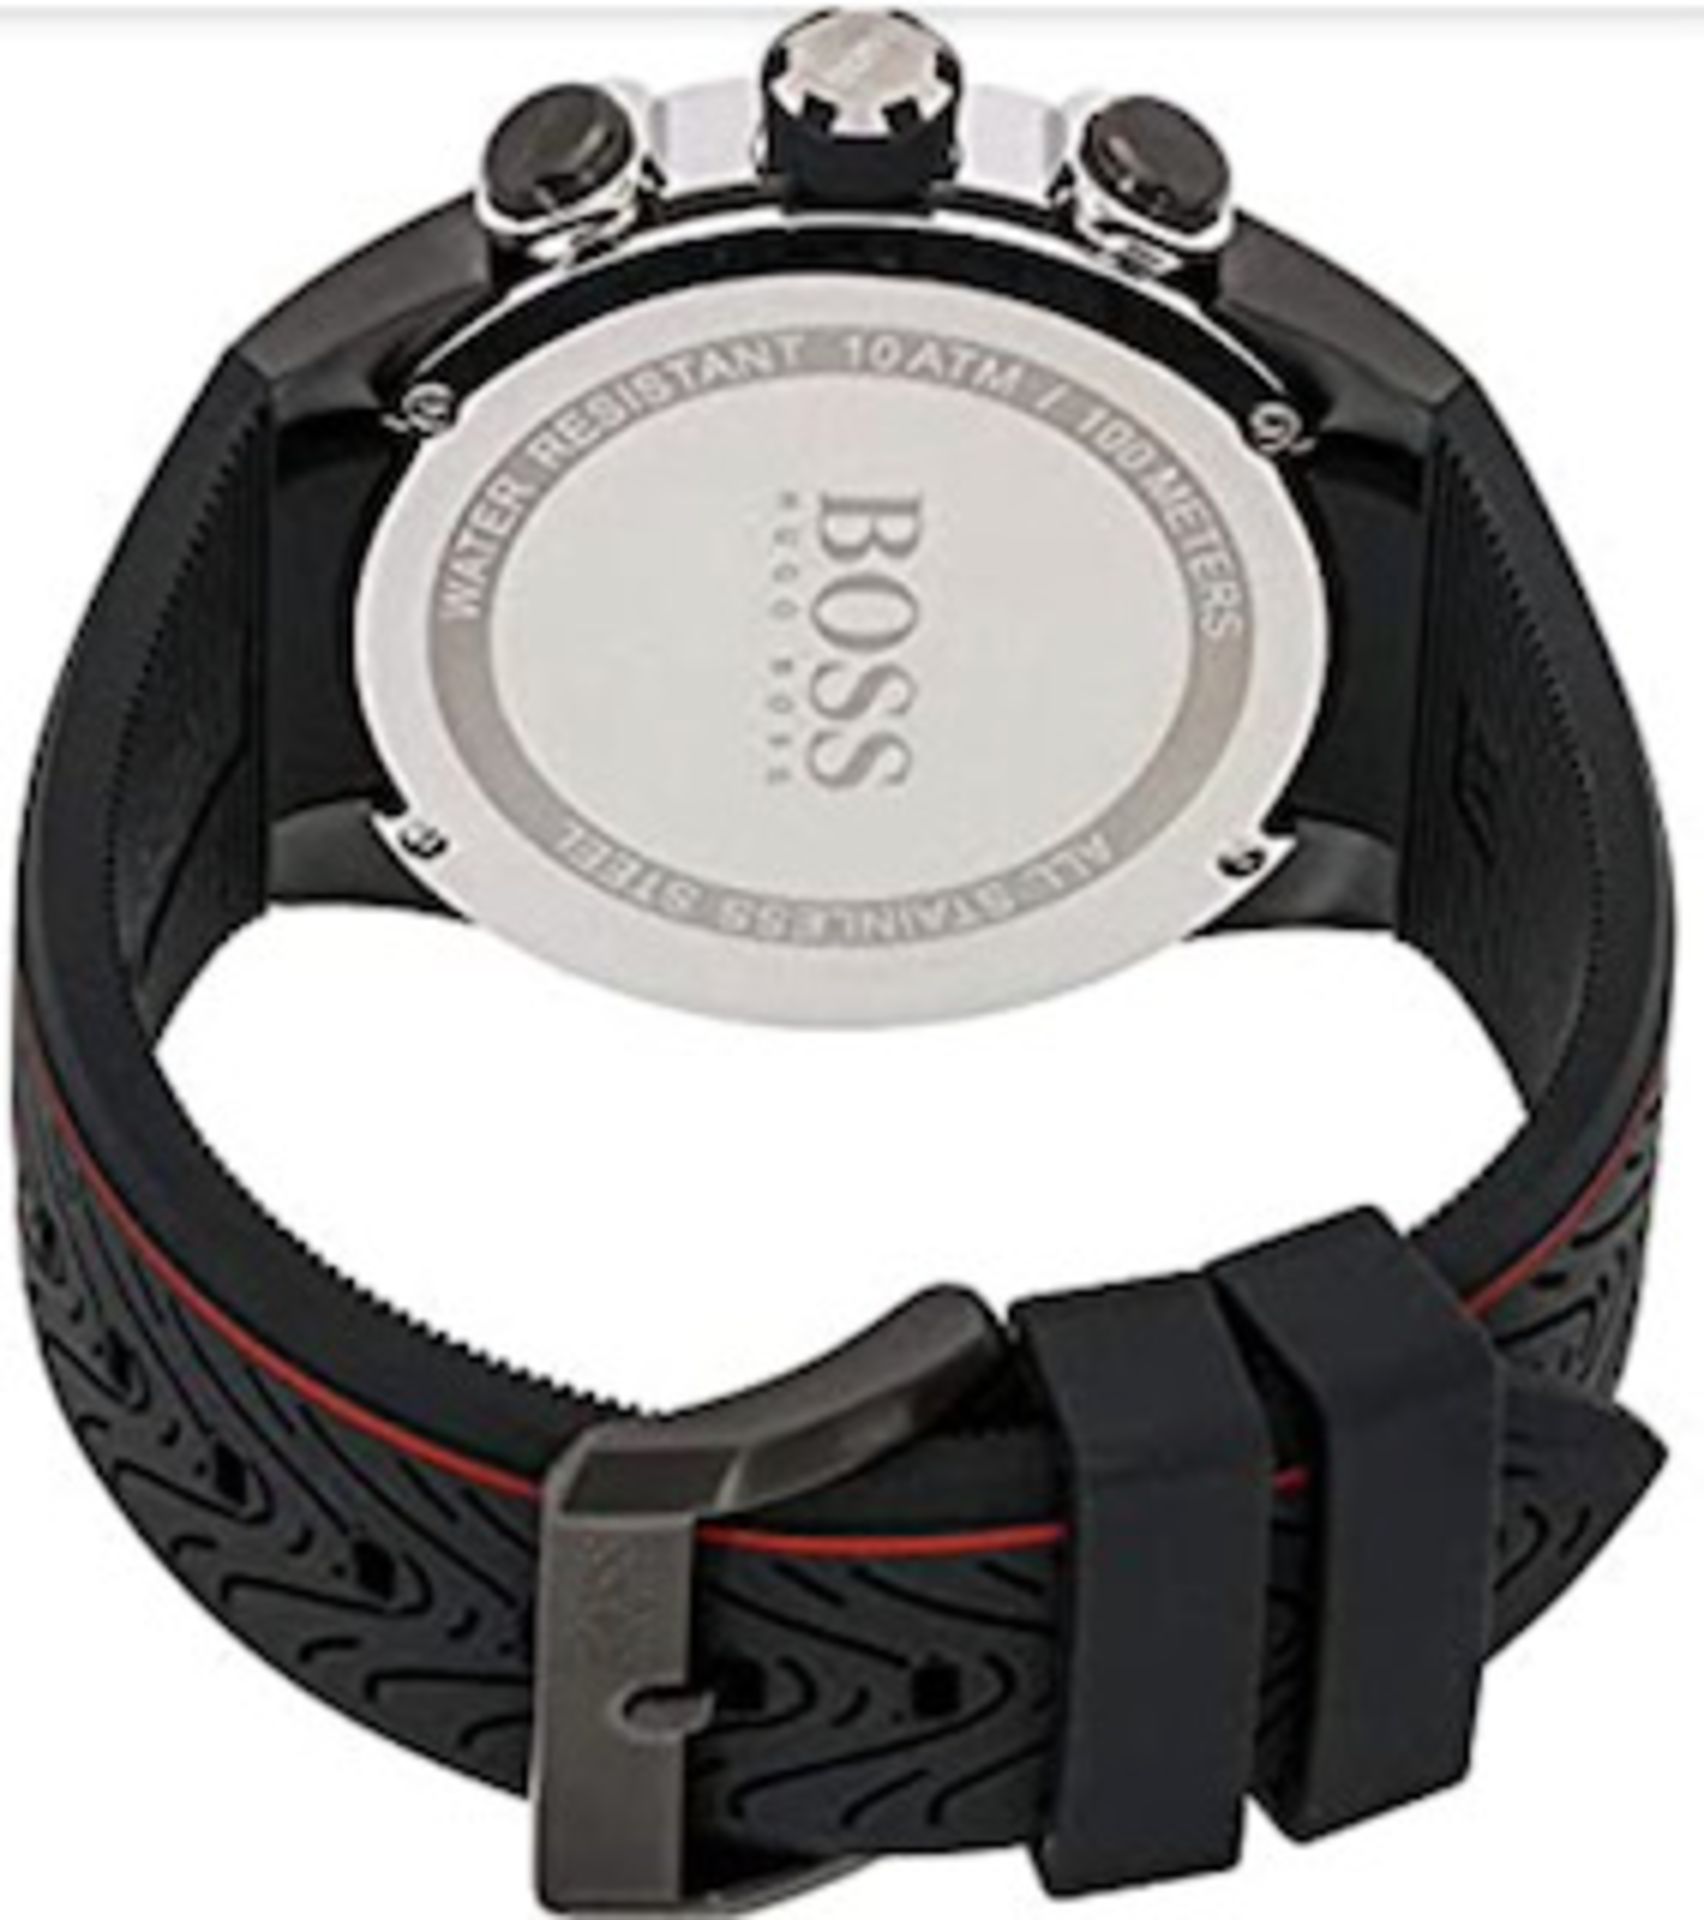 Hugo Boss Contemporary Sport Motorsport Analog Black Dial Men's Watch 1513284 - Image 2 of 3